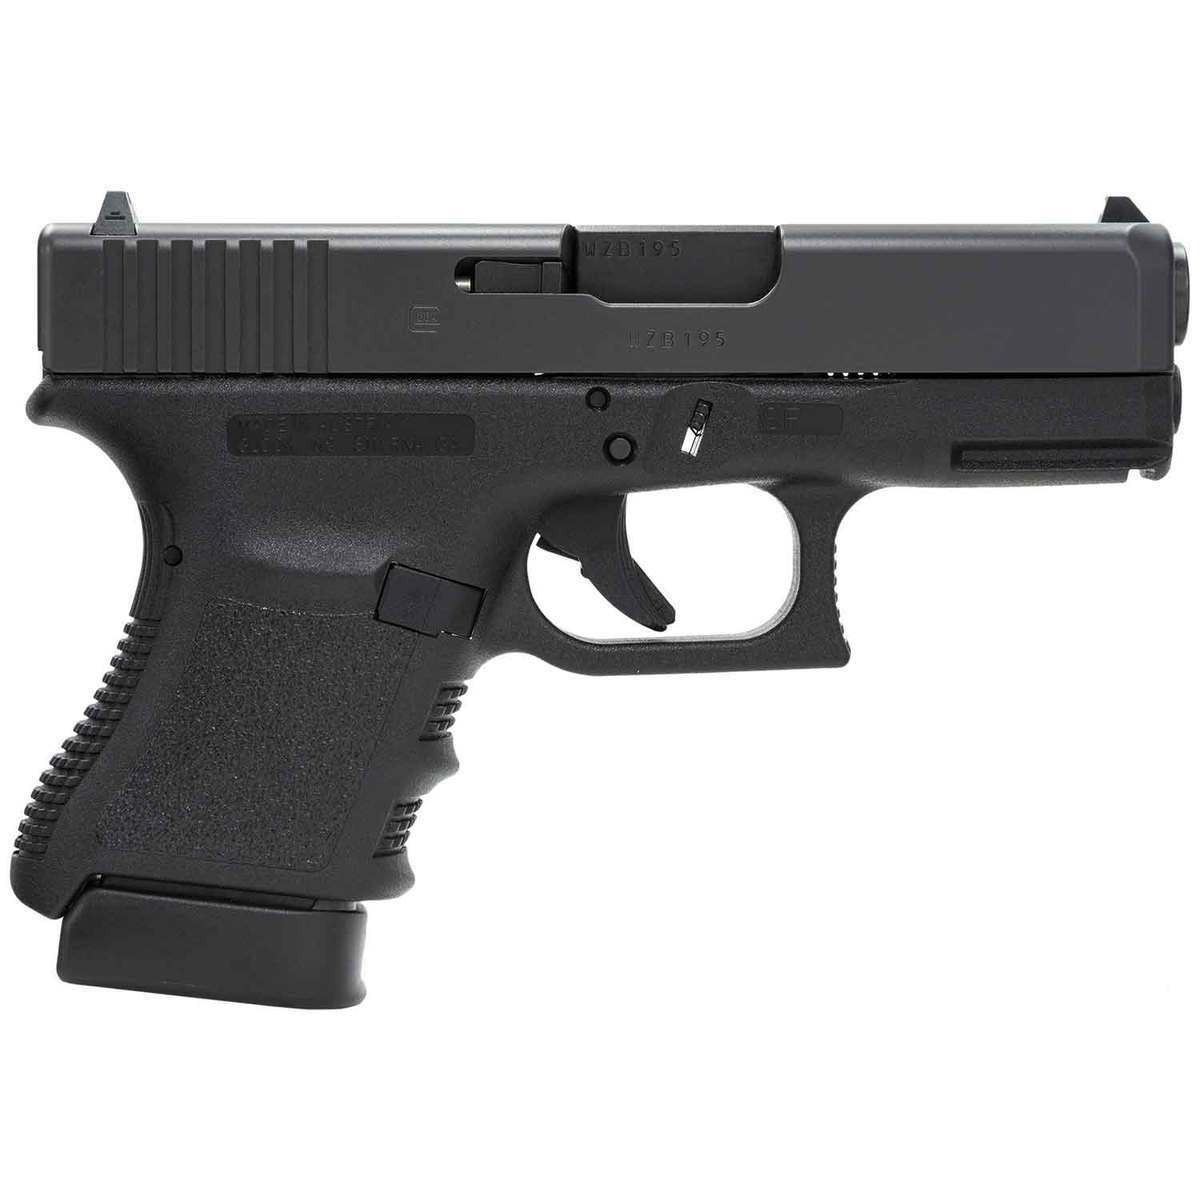 Glock 45 ACP: Glock 30 and Glock 36